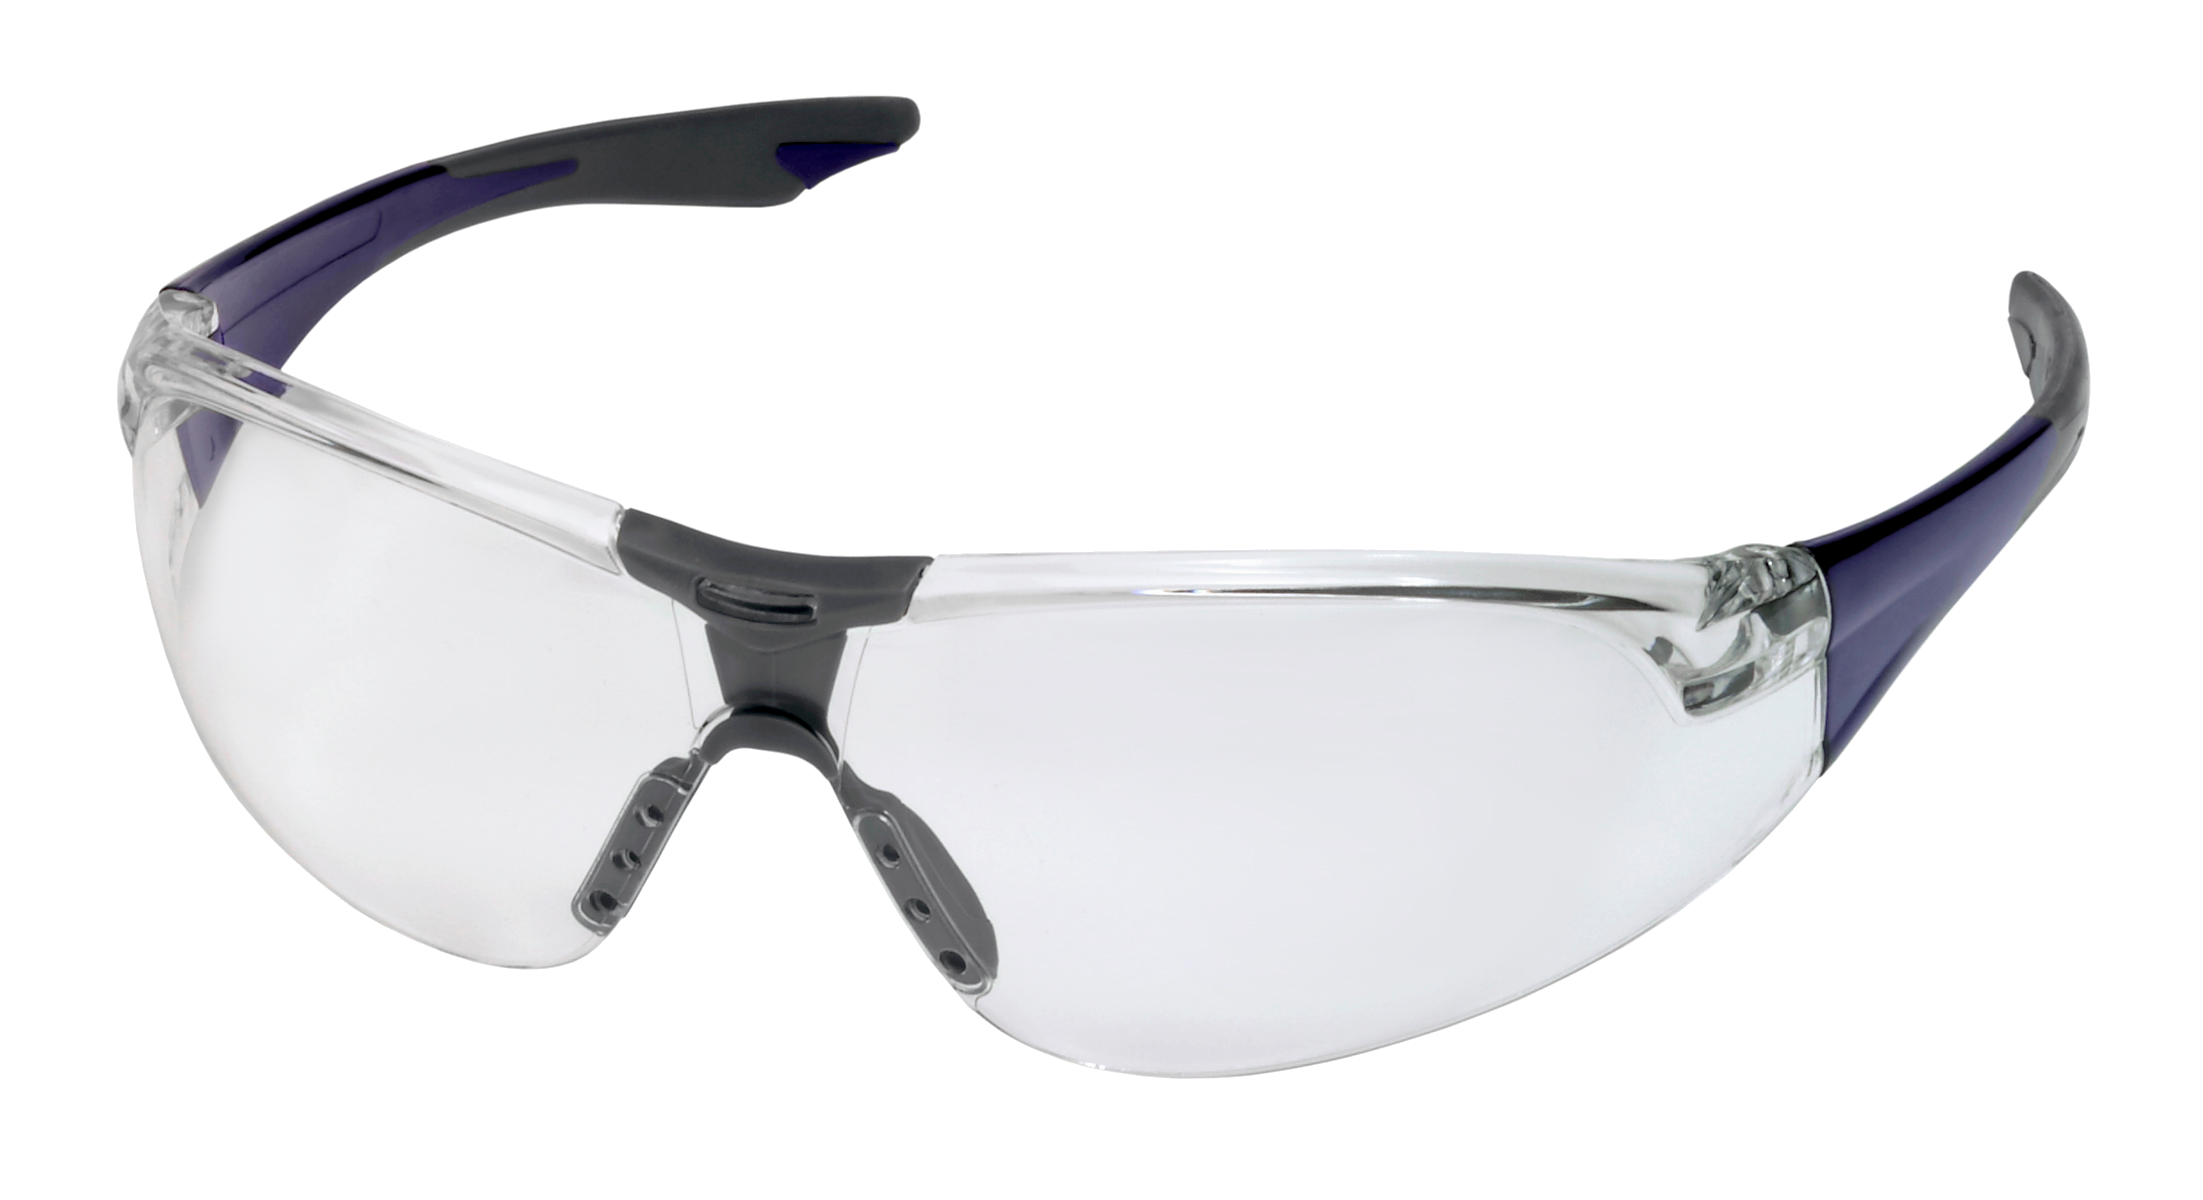 Sport sunglasses PNG image transparent image download, size: 2203x1200px